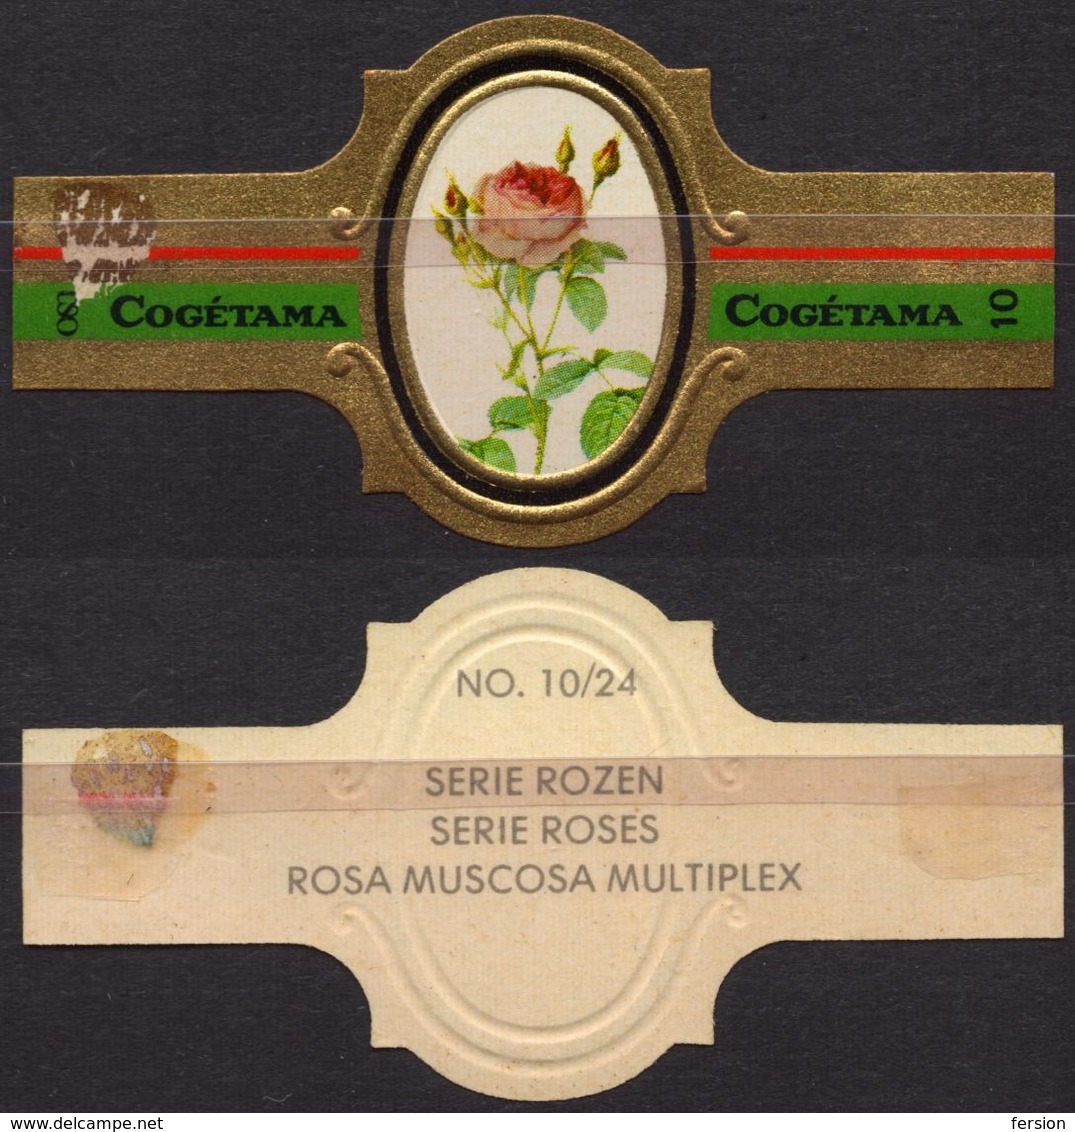 Muscosa Multiplex - ROSE ROSES - Netherlands Holland / Cogétama / CIGAR CIGARS Label Vignette - Etiquetas